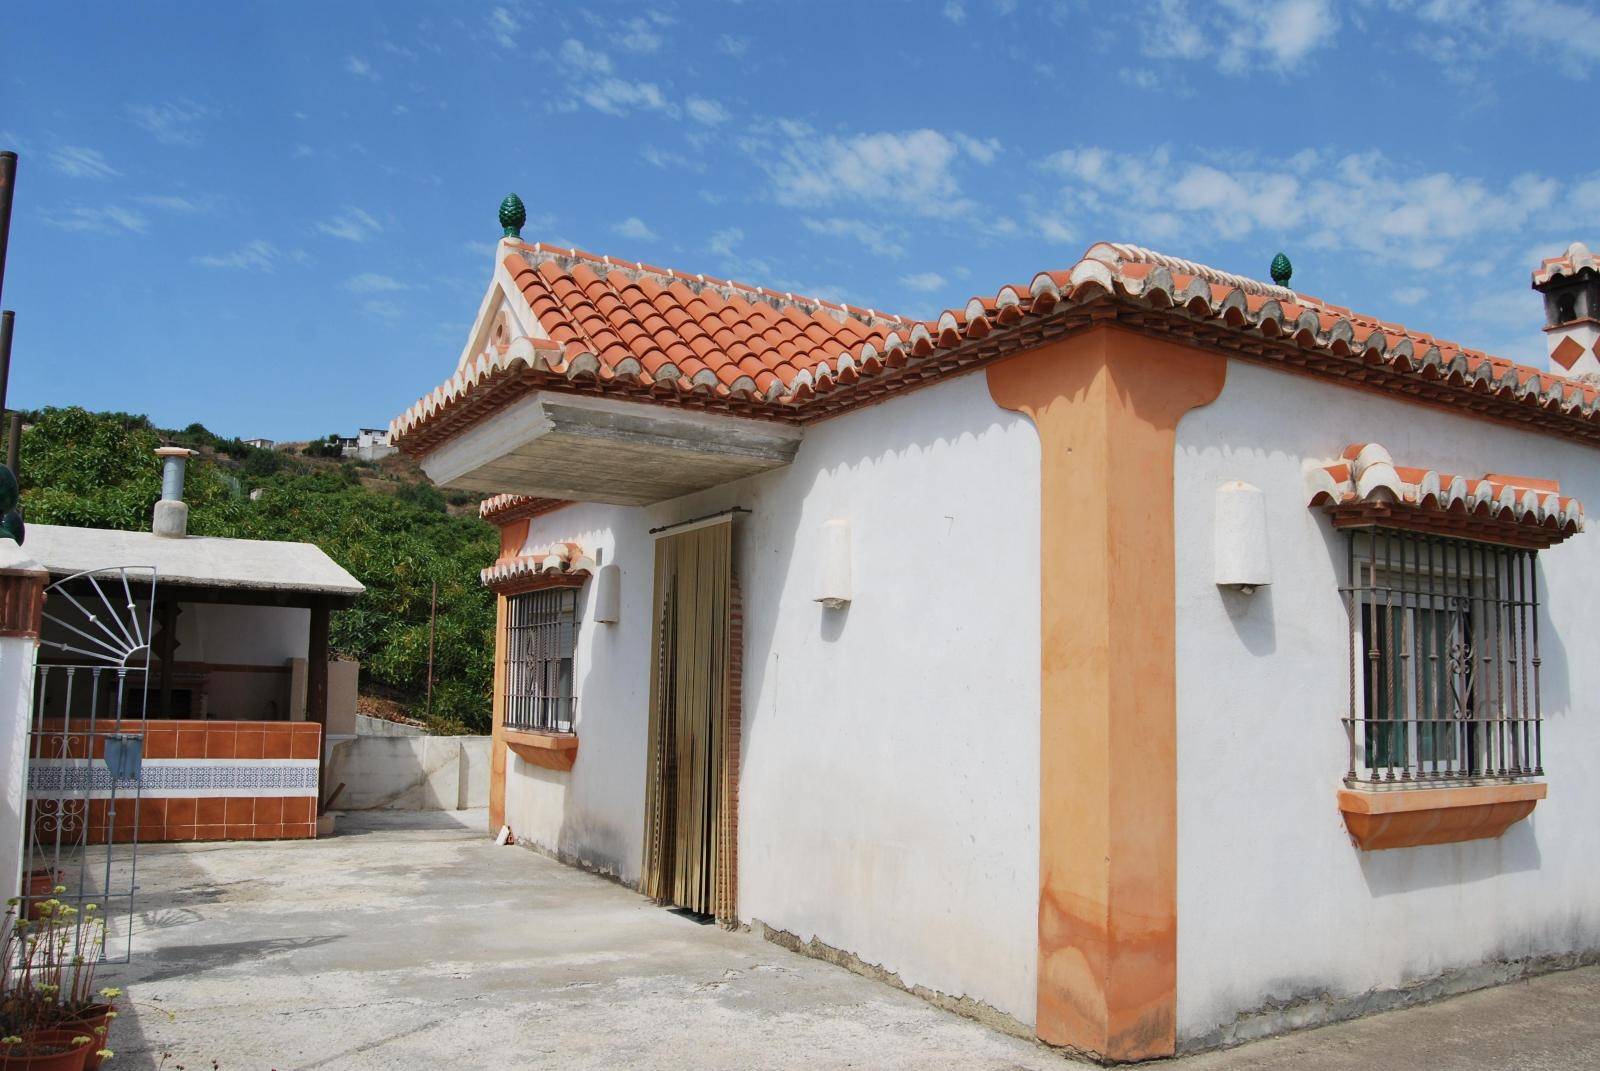 Casa de campo con encanto en venta en Salobreña, Matagallares